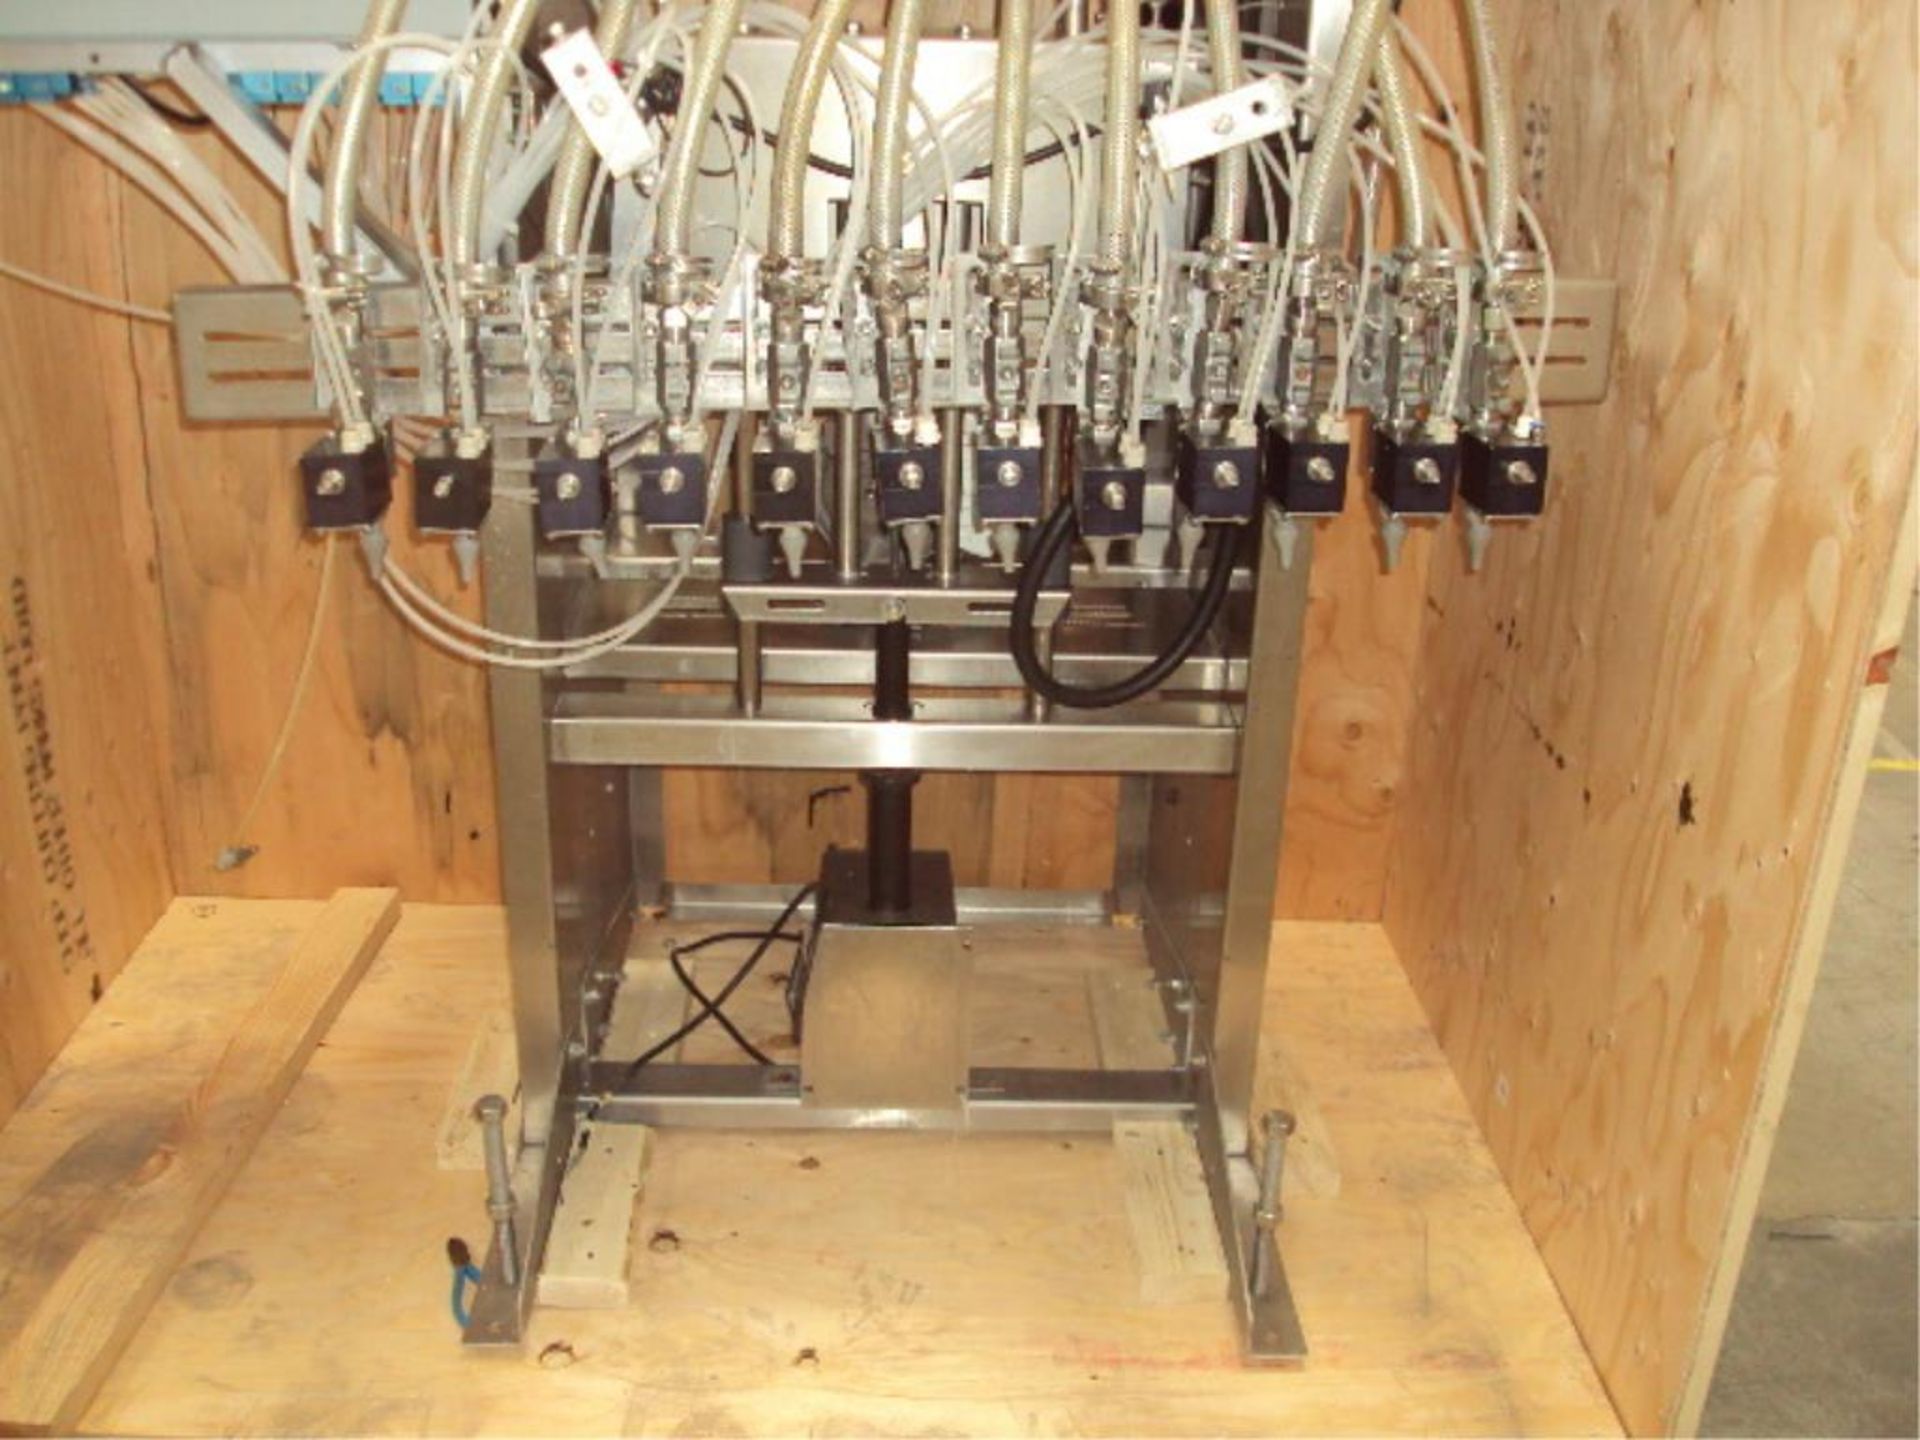 12-Head Electronic Liquid Filling Machine - Image 8 of 10